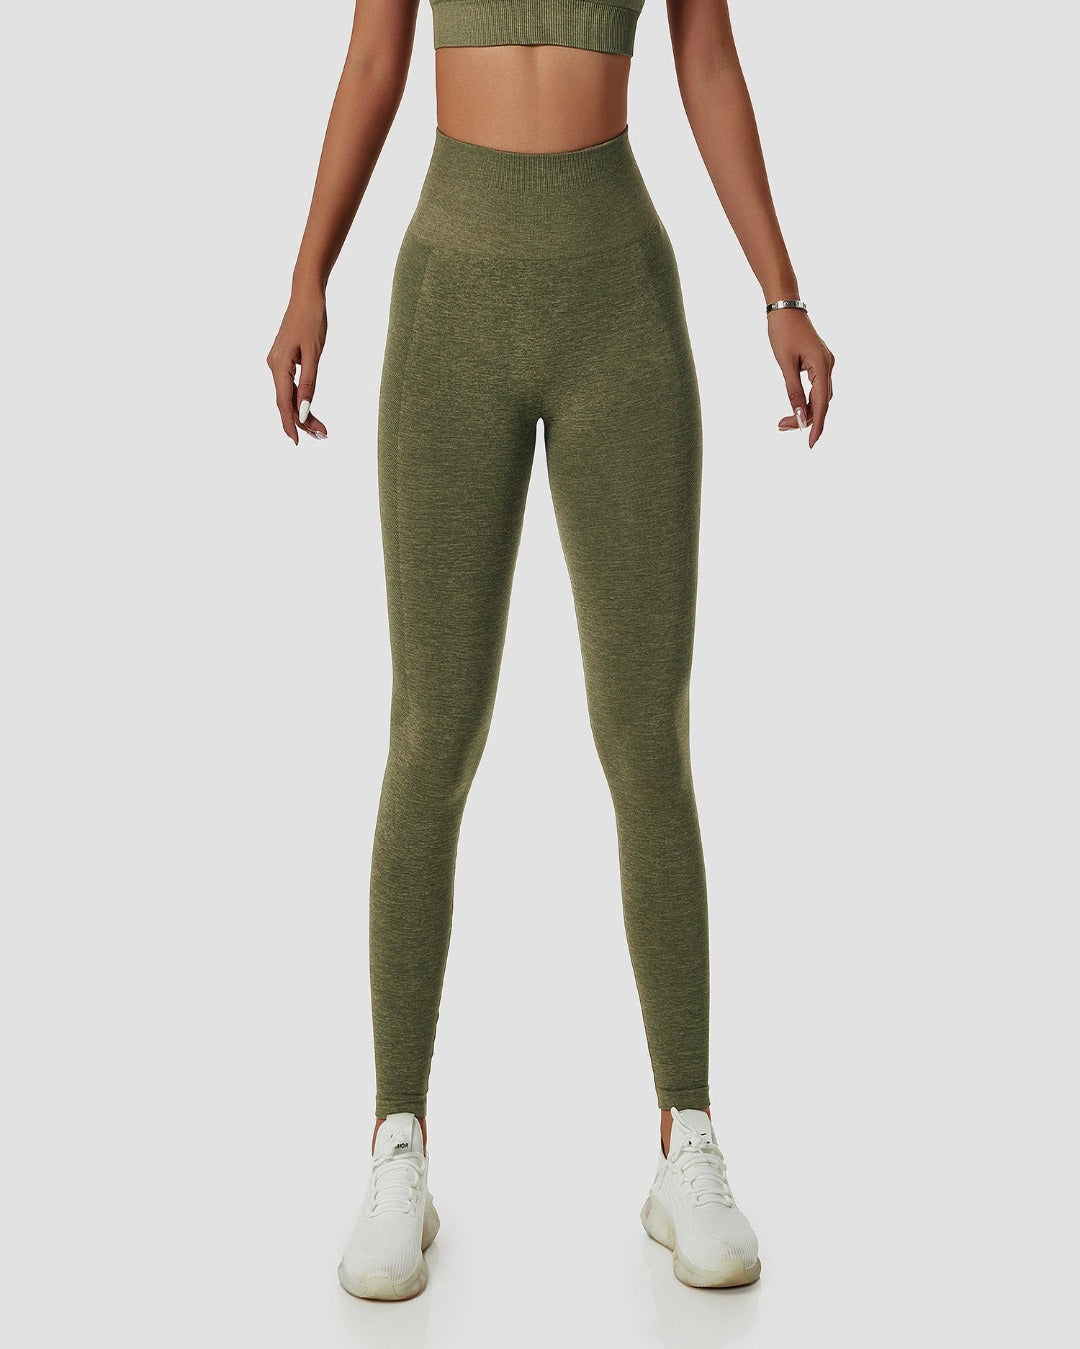 Girls Army Green Camouflage Print Leggings | Fashionoutletnyc.com